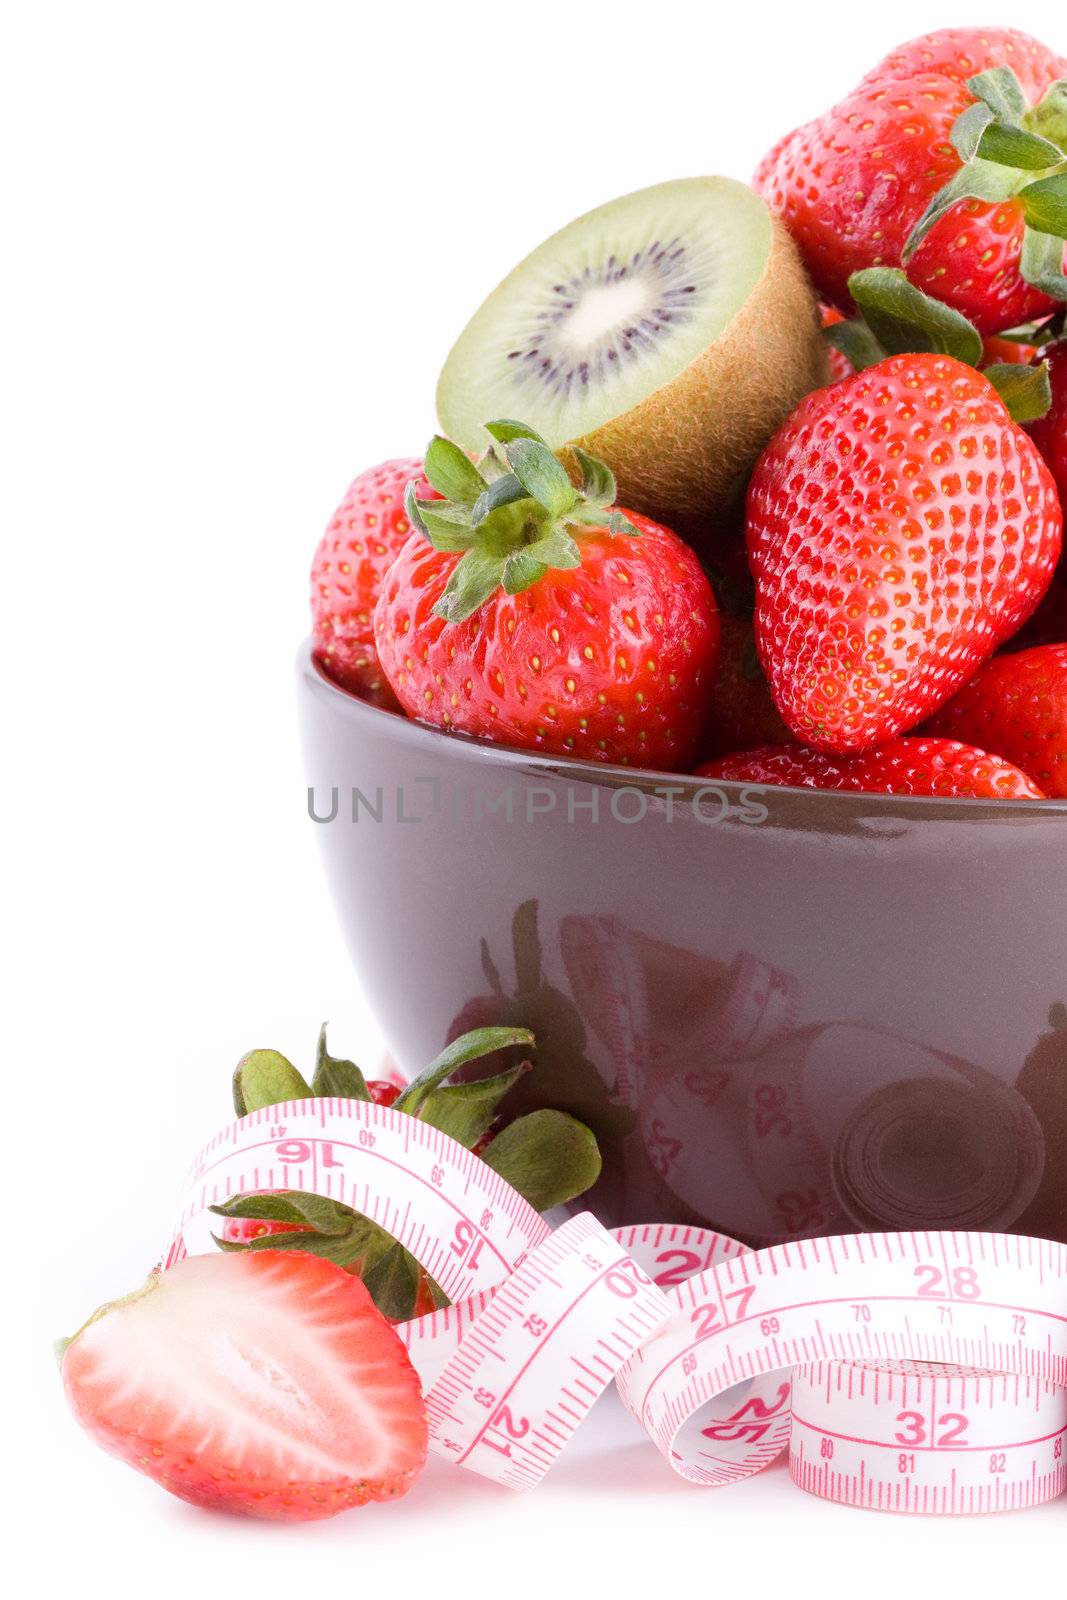 Strawberries in a bowl by Gbuglok